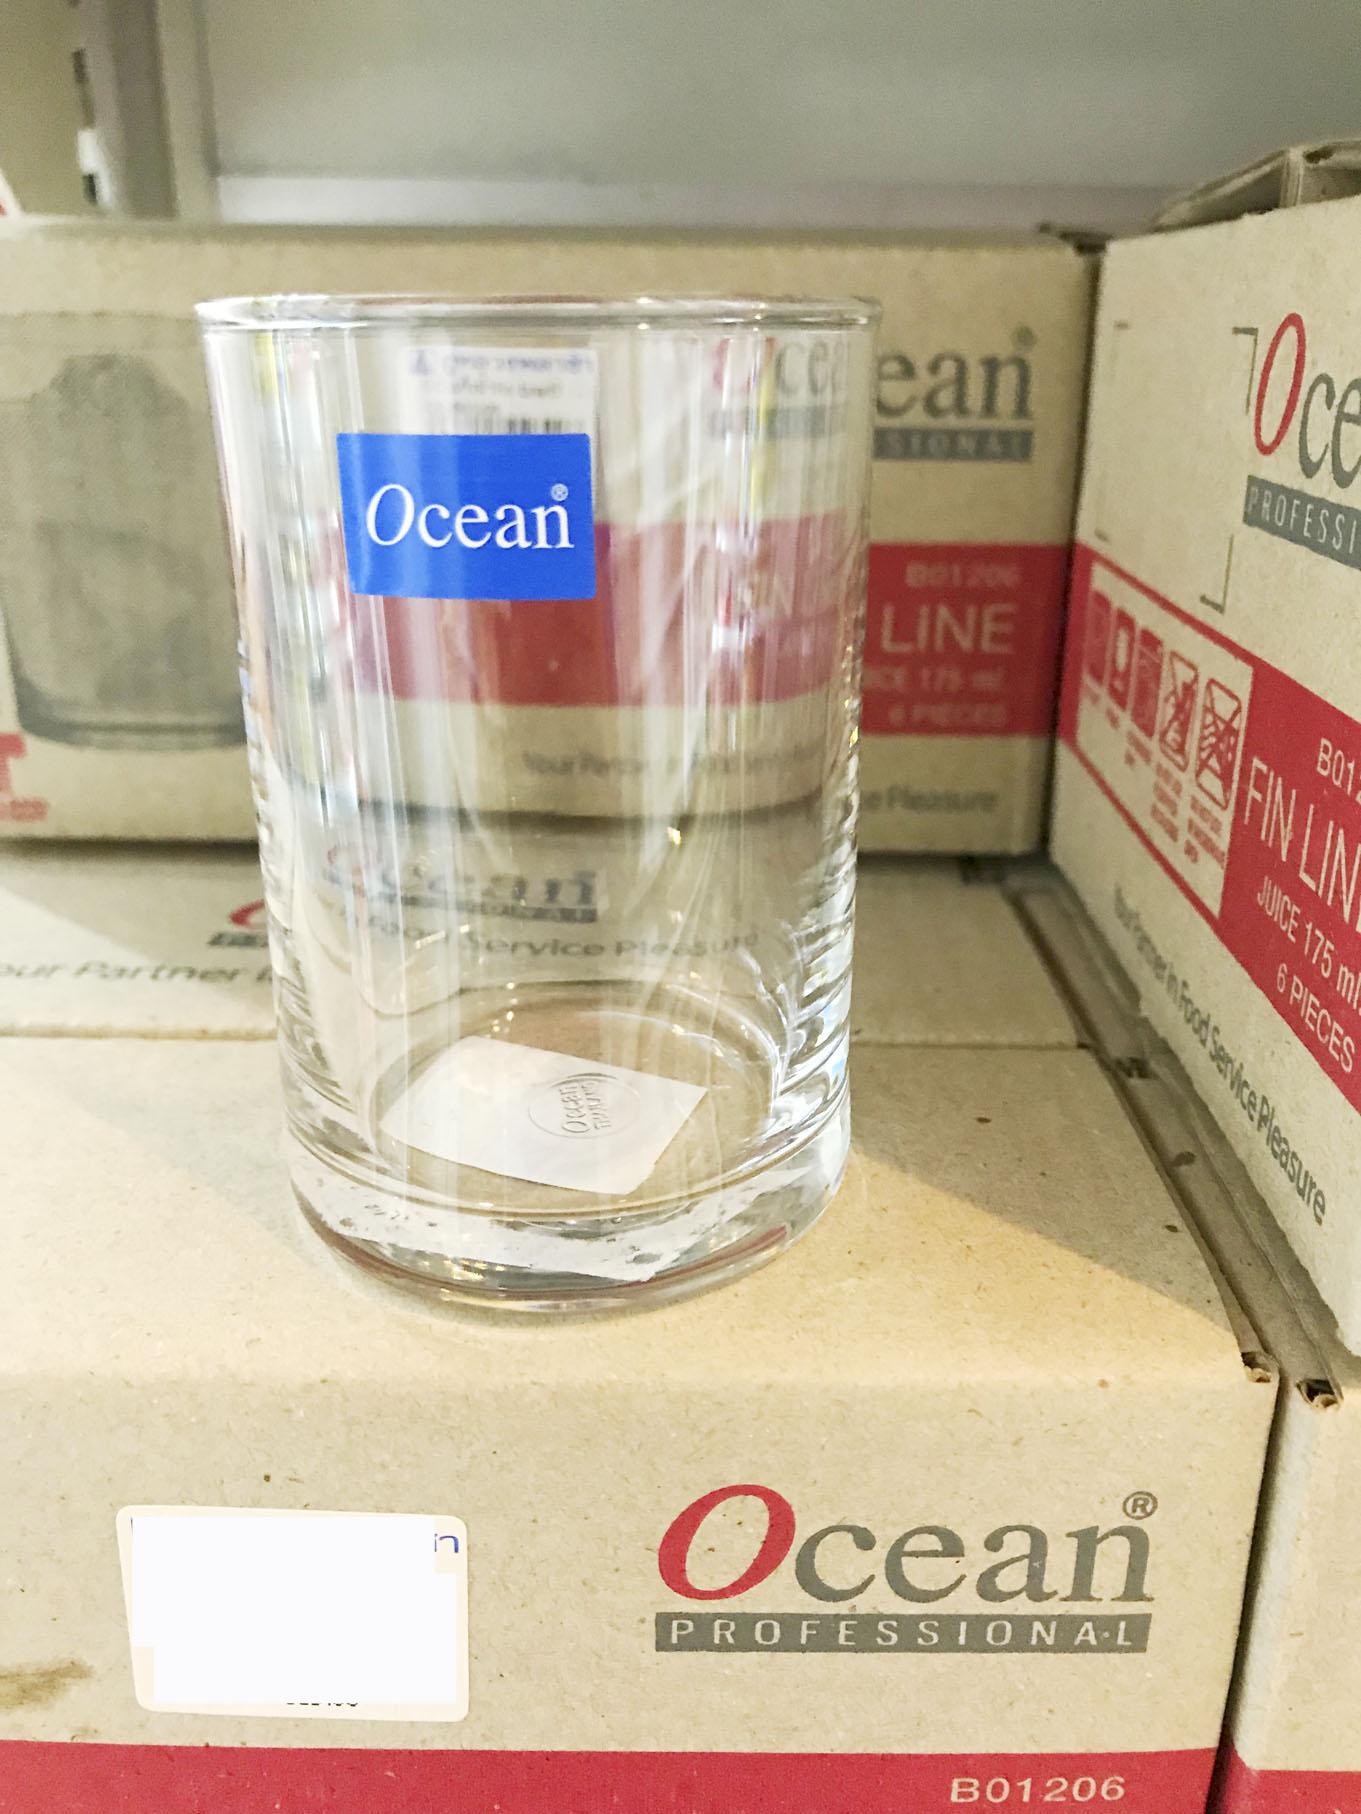 Ocean Fin Line Juice Glass Set (6 Pcs) - 175 ml - (For Pick Up From De —